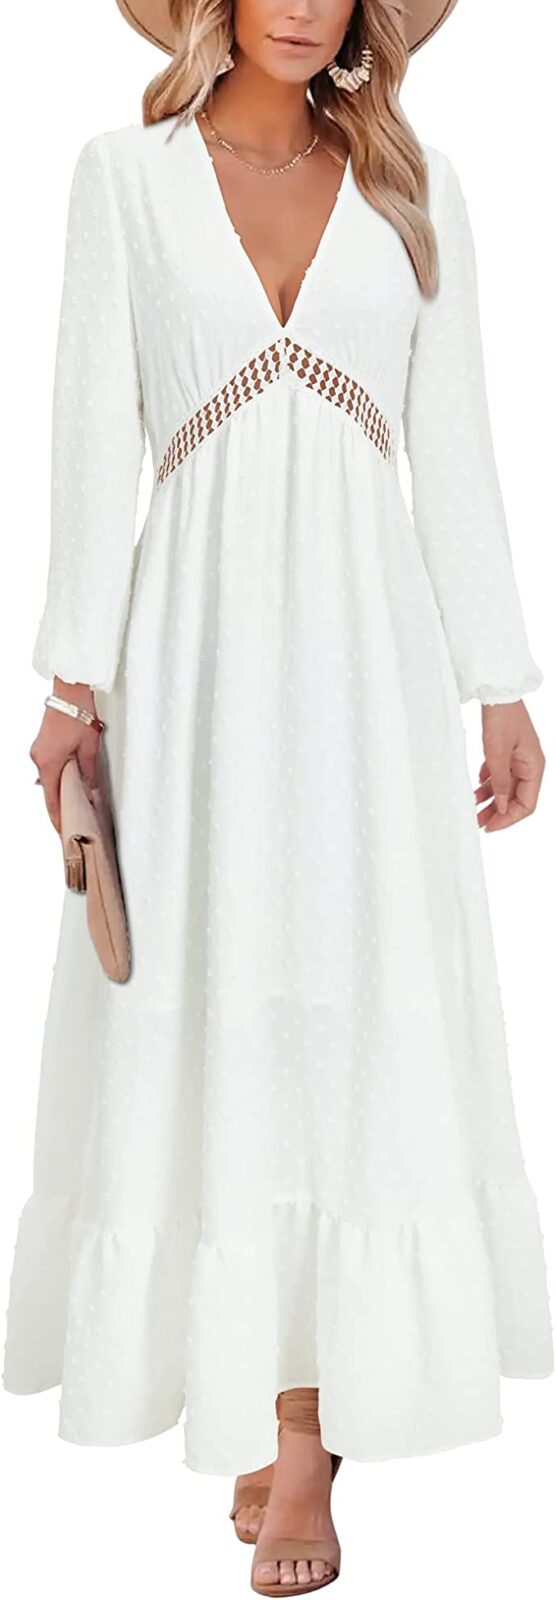 Little White Dresses For Your Bridal Shower or Engagement Party | Brontë Bride | Shop our bridal attire favourites on Amazon.ca | long sleeve boho bridal shower beachy dress